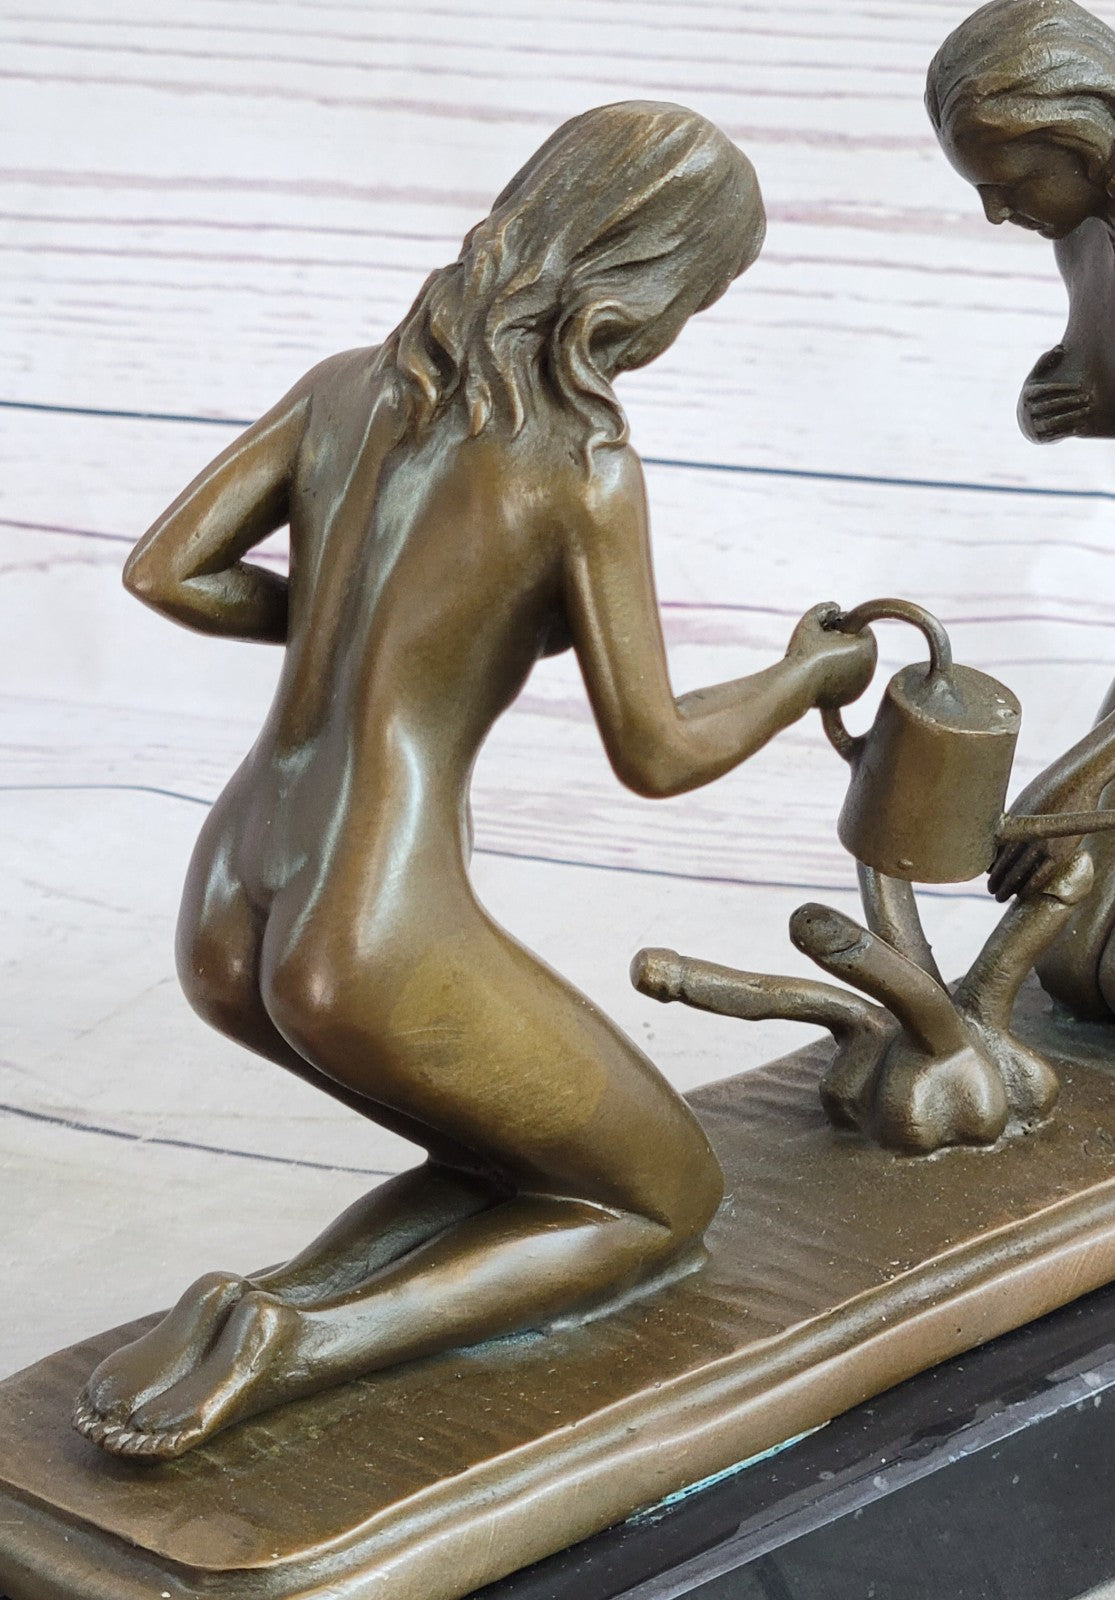 Provocative Bronze Artwork: Sensuous Nude Girl Tending to Growing Erotic Plant Statue